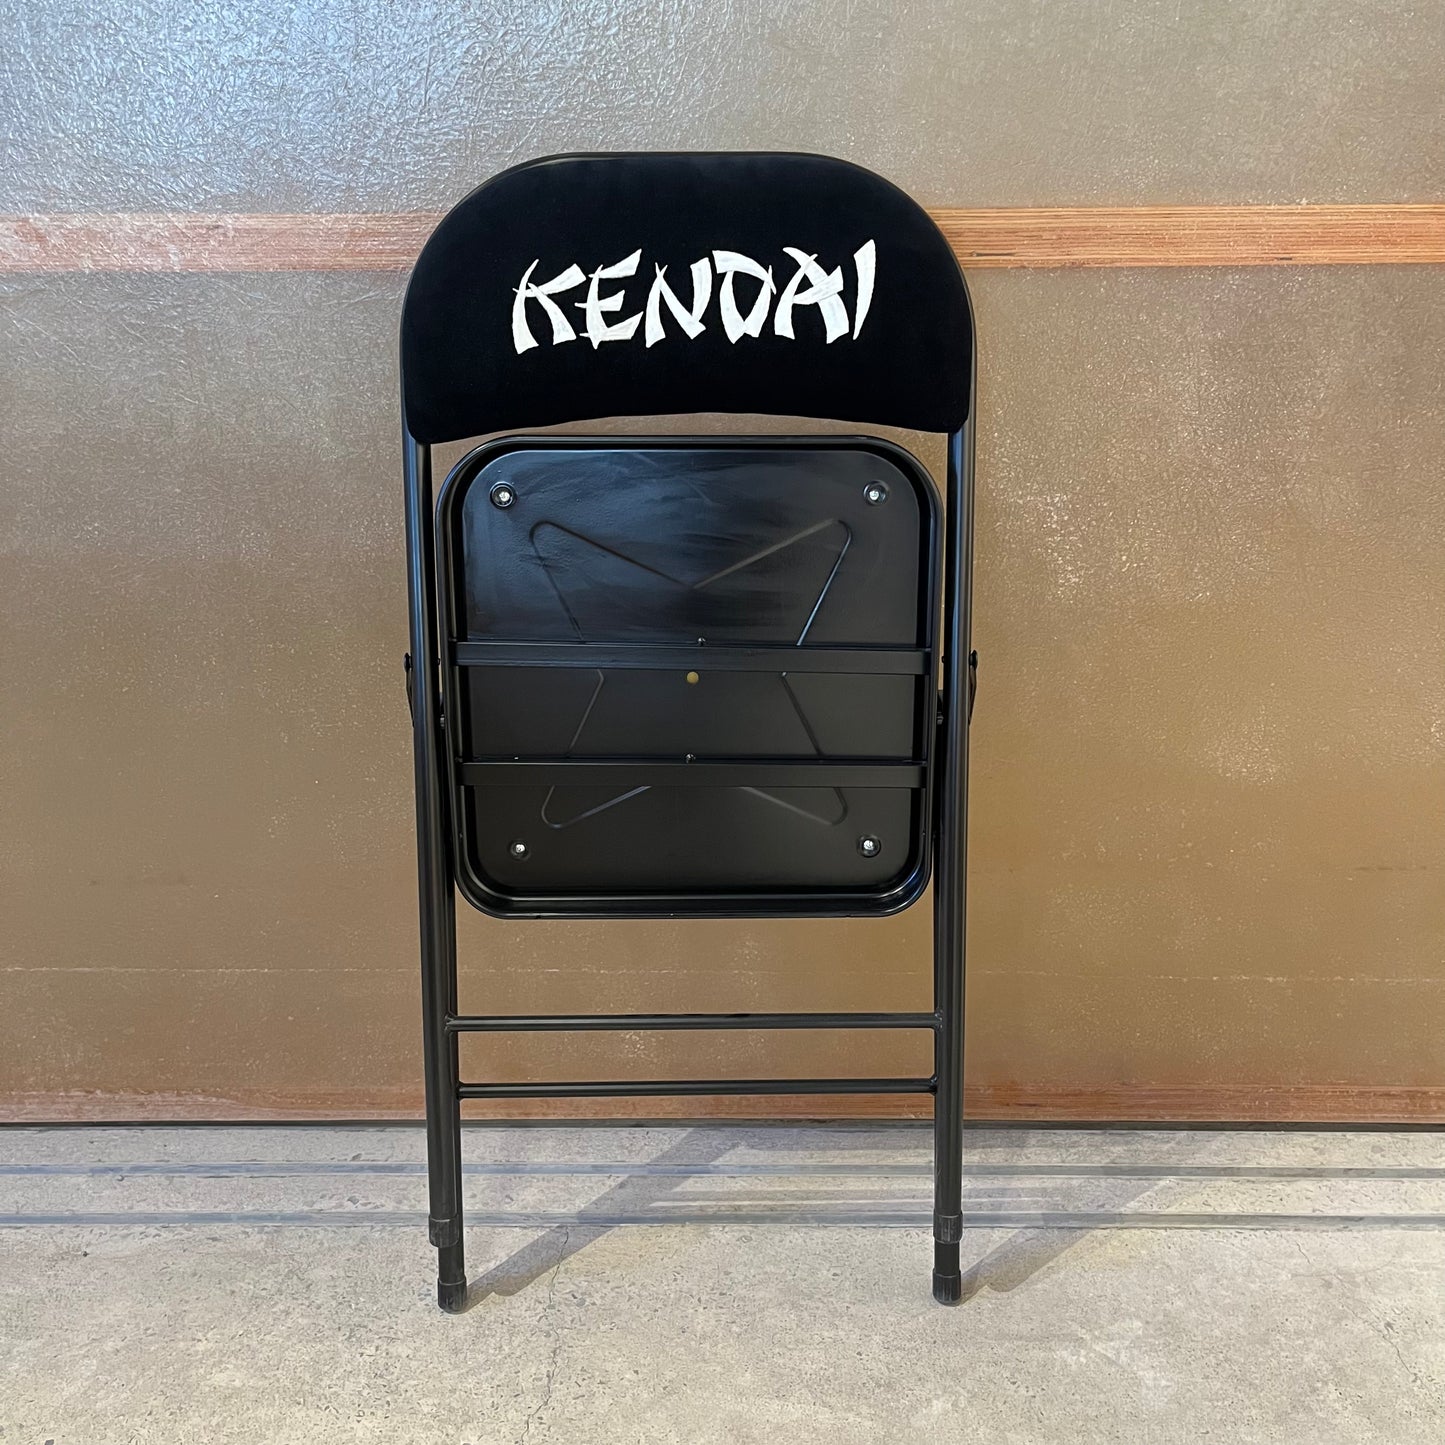 KENDAI Embroidery Chair Black